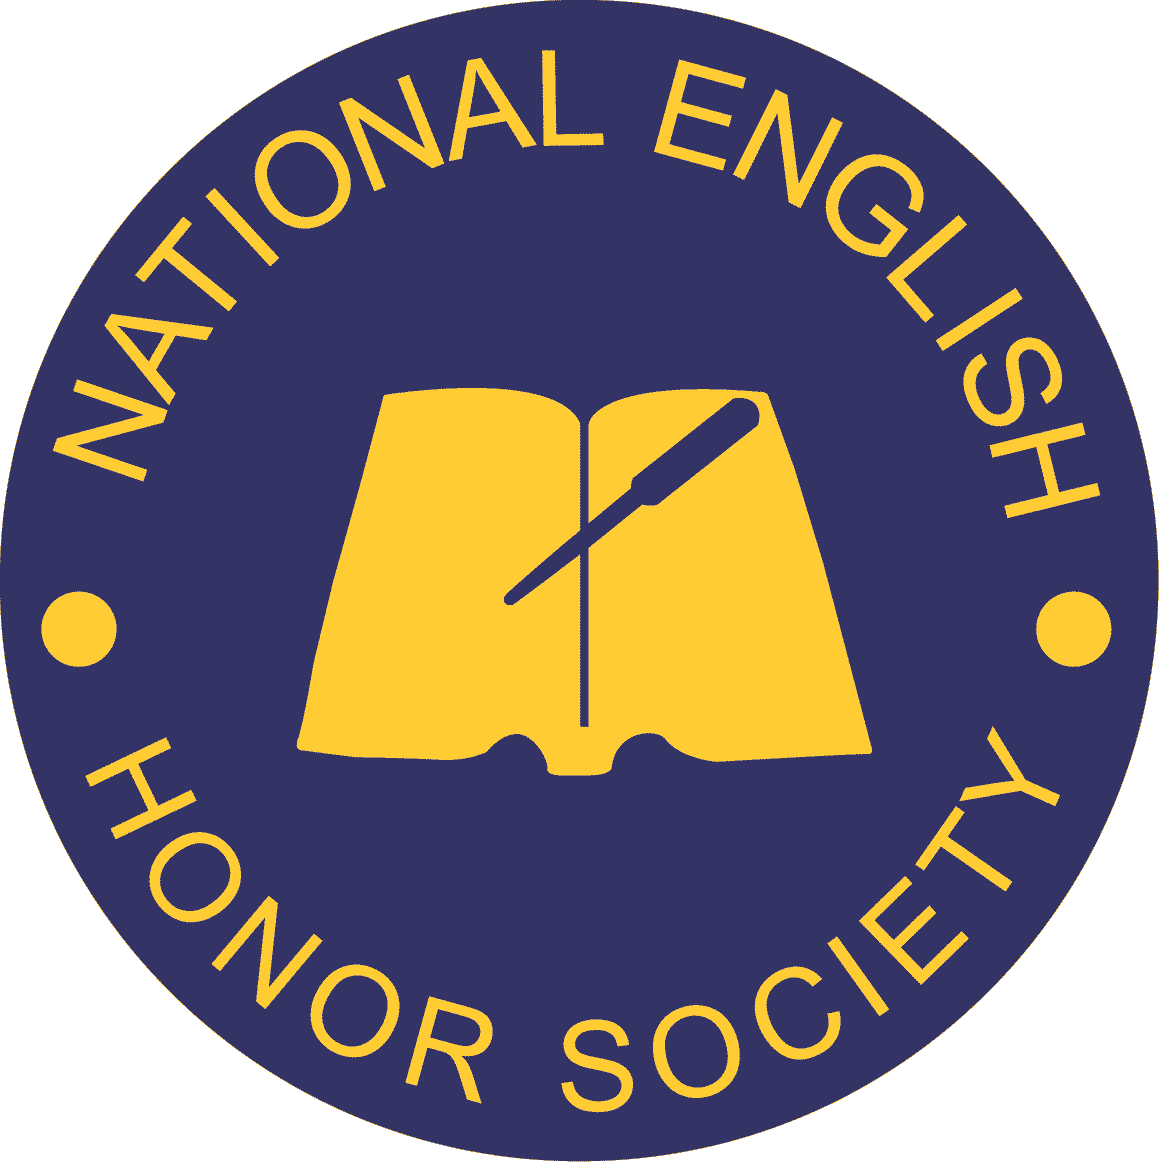 National English Honors Society - English Honor Society Logo (1163x1167)